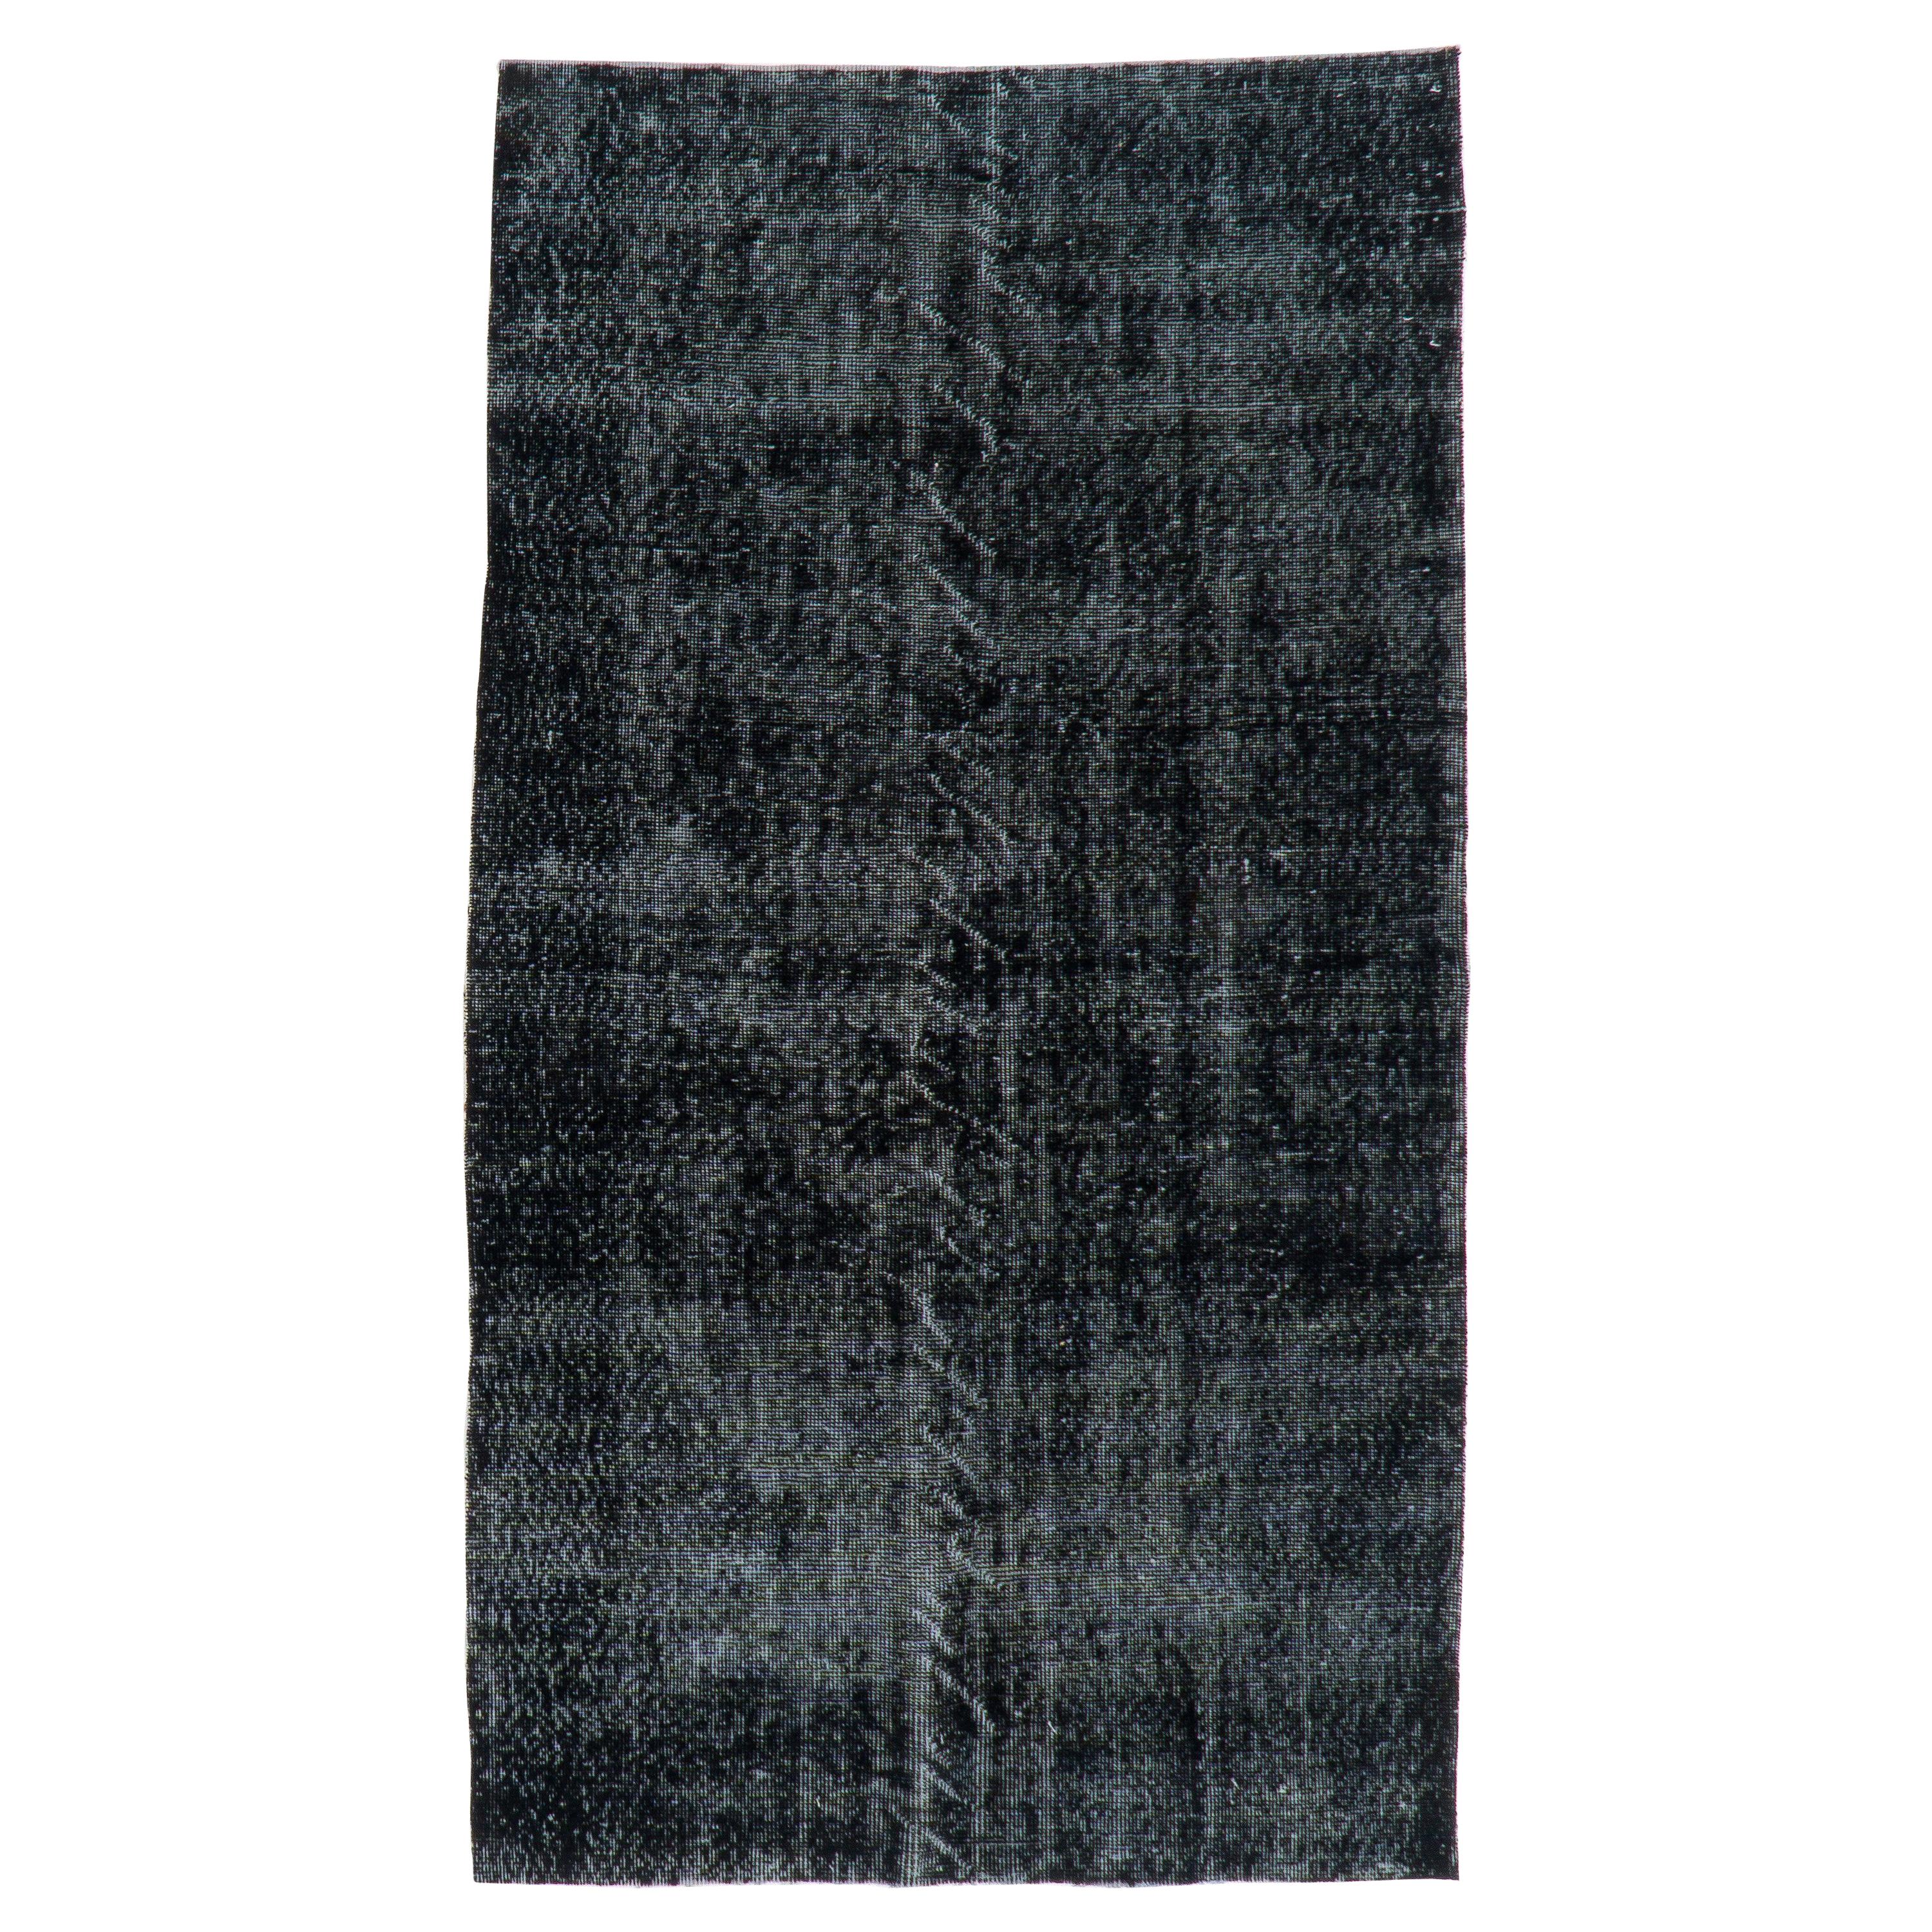 3.7x6.6 Ft Vintage Handmade Turkish Accent Rug. Modern Carpet in Solid Black